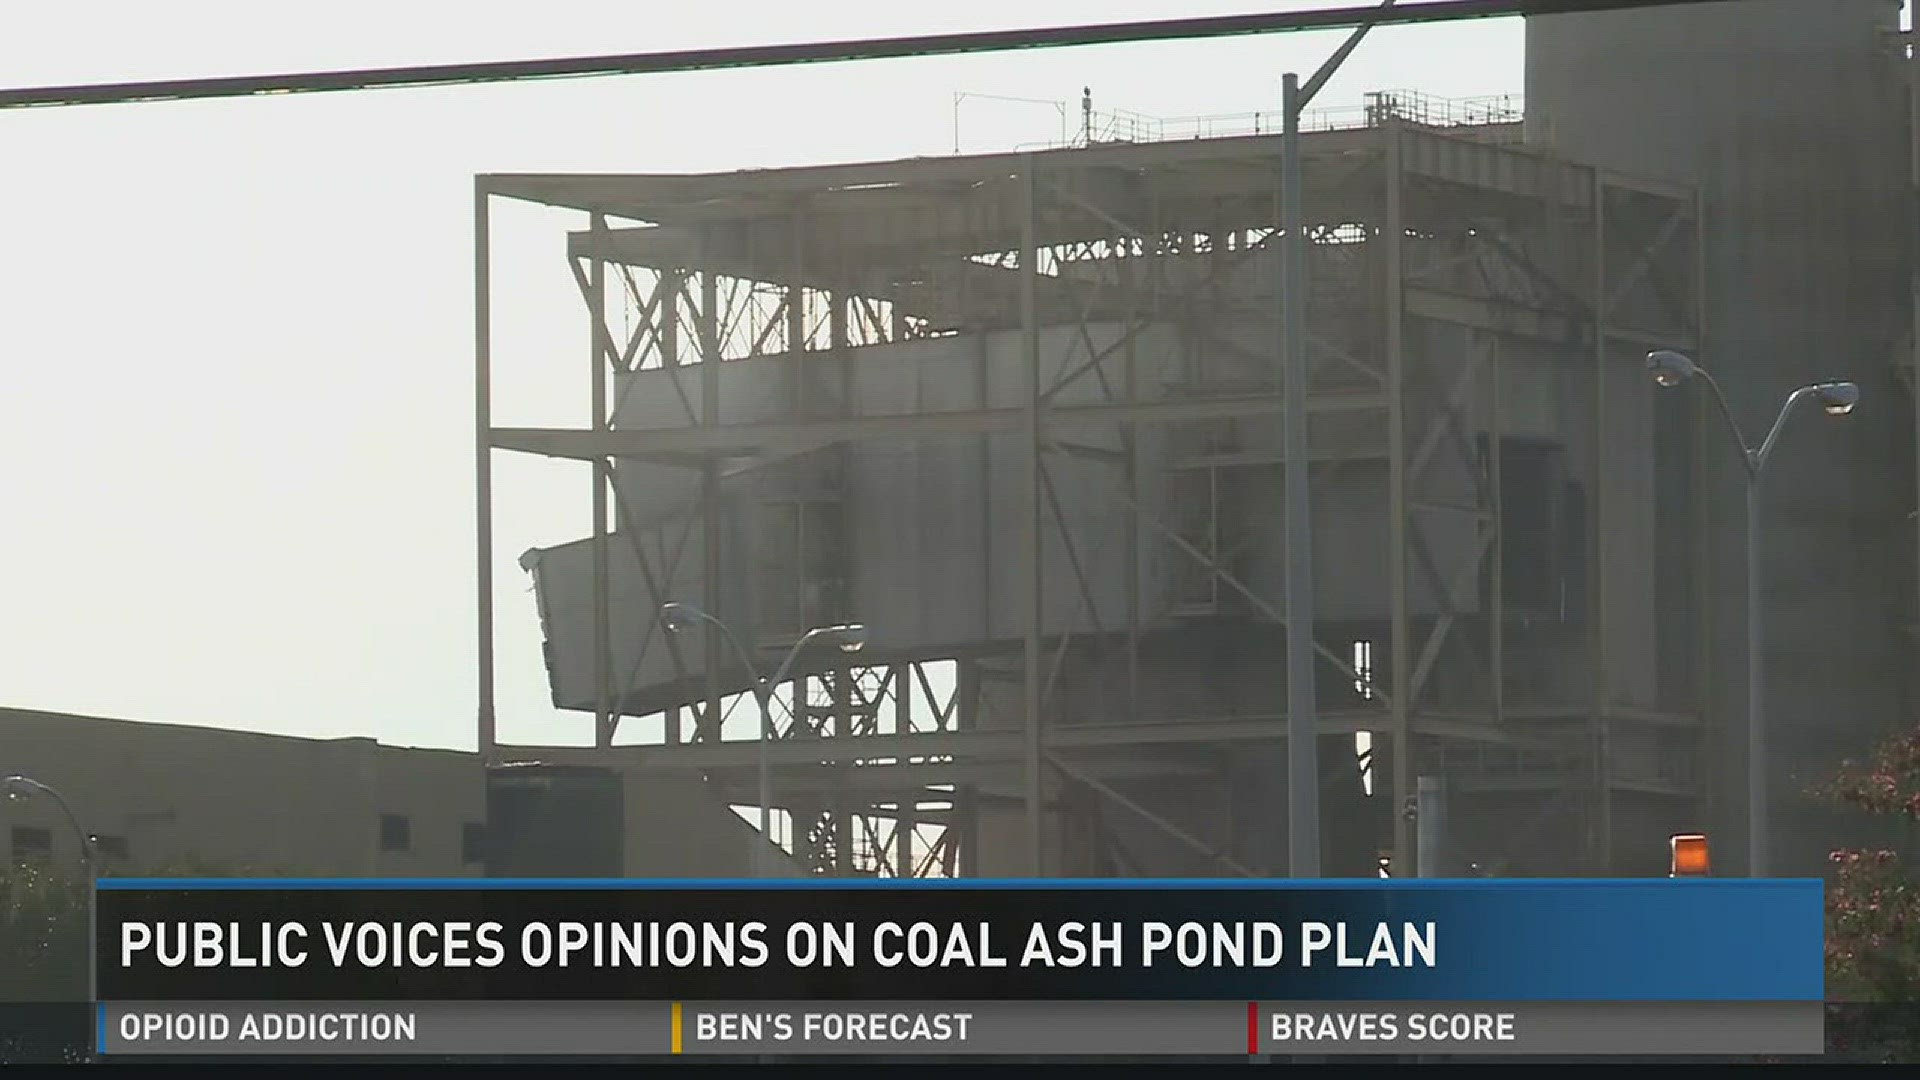 Public voices opinions on coal ash pond plan